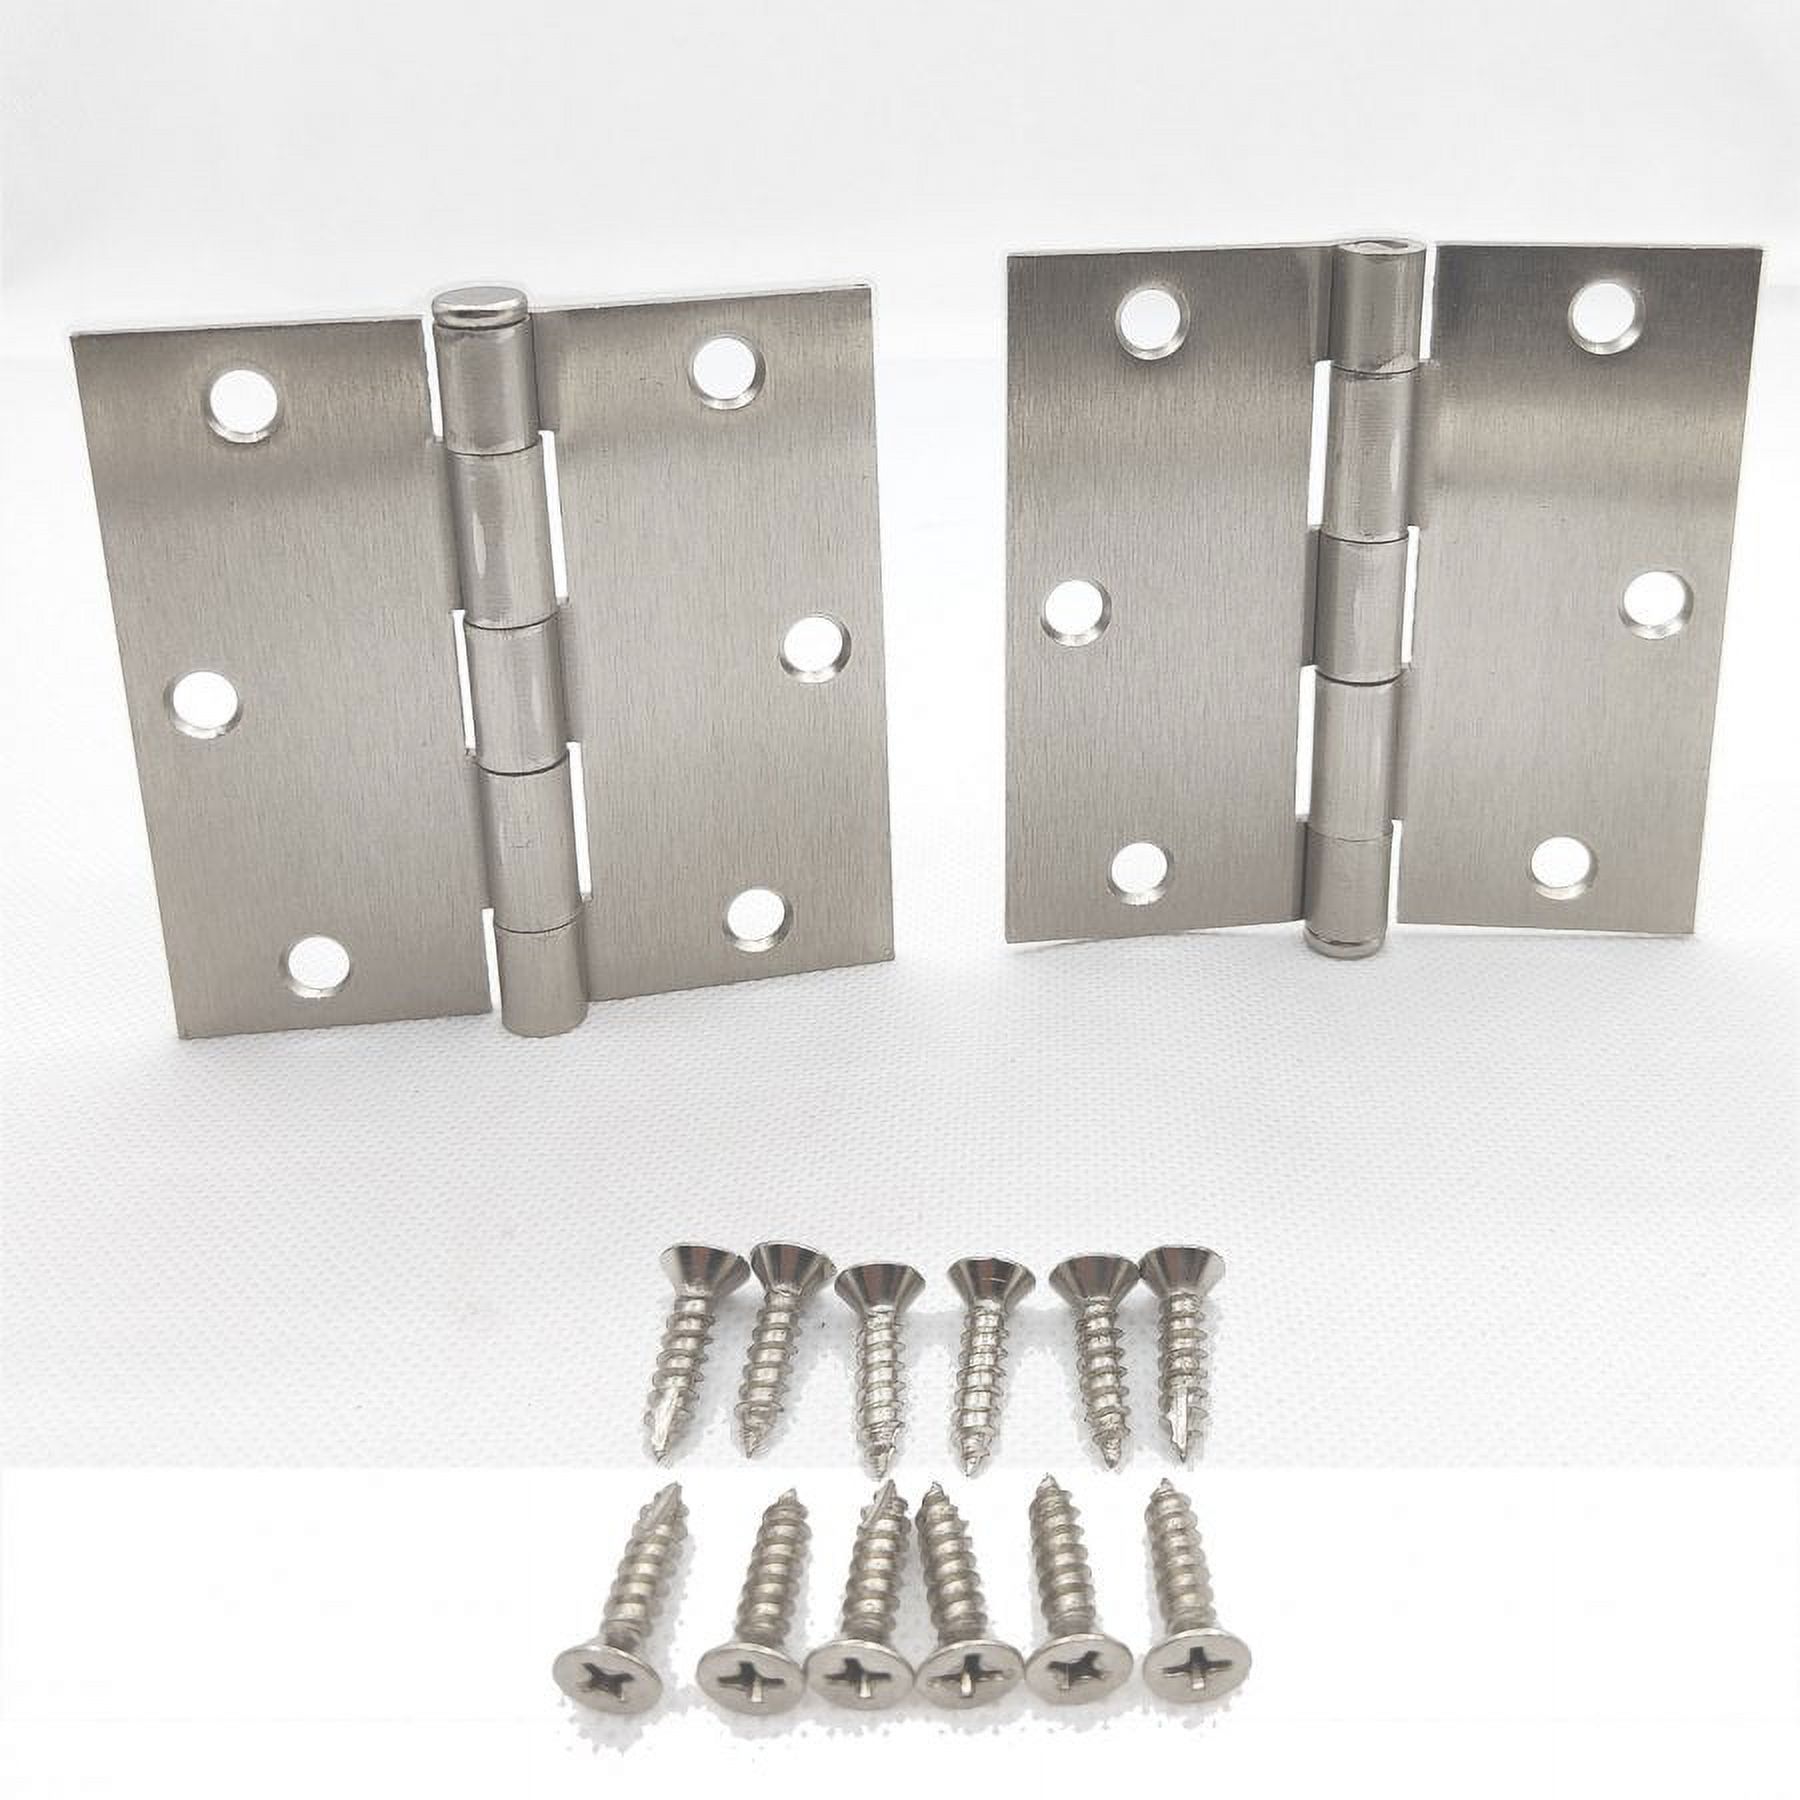 50pair(100pcs)Steel door hinge 3-1/2"Square corner,satin nickel,removable pin, door hinge,mobile home door hinge  and cabinet hinge,with screws - image 5 of 6